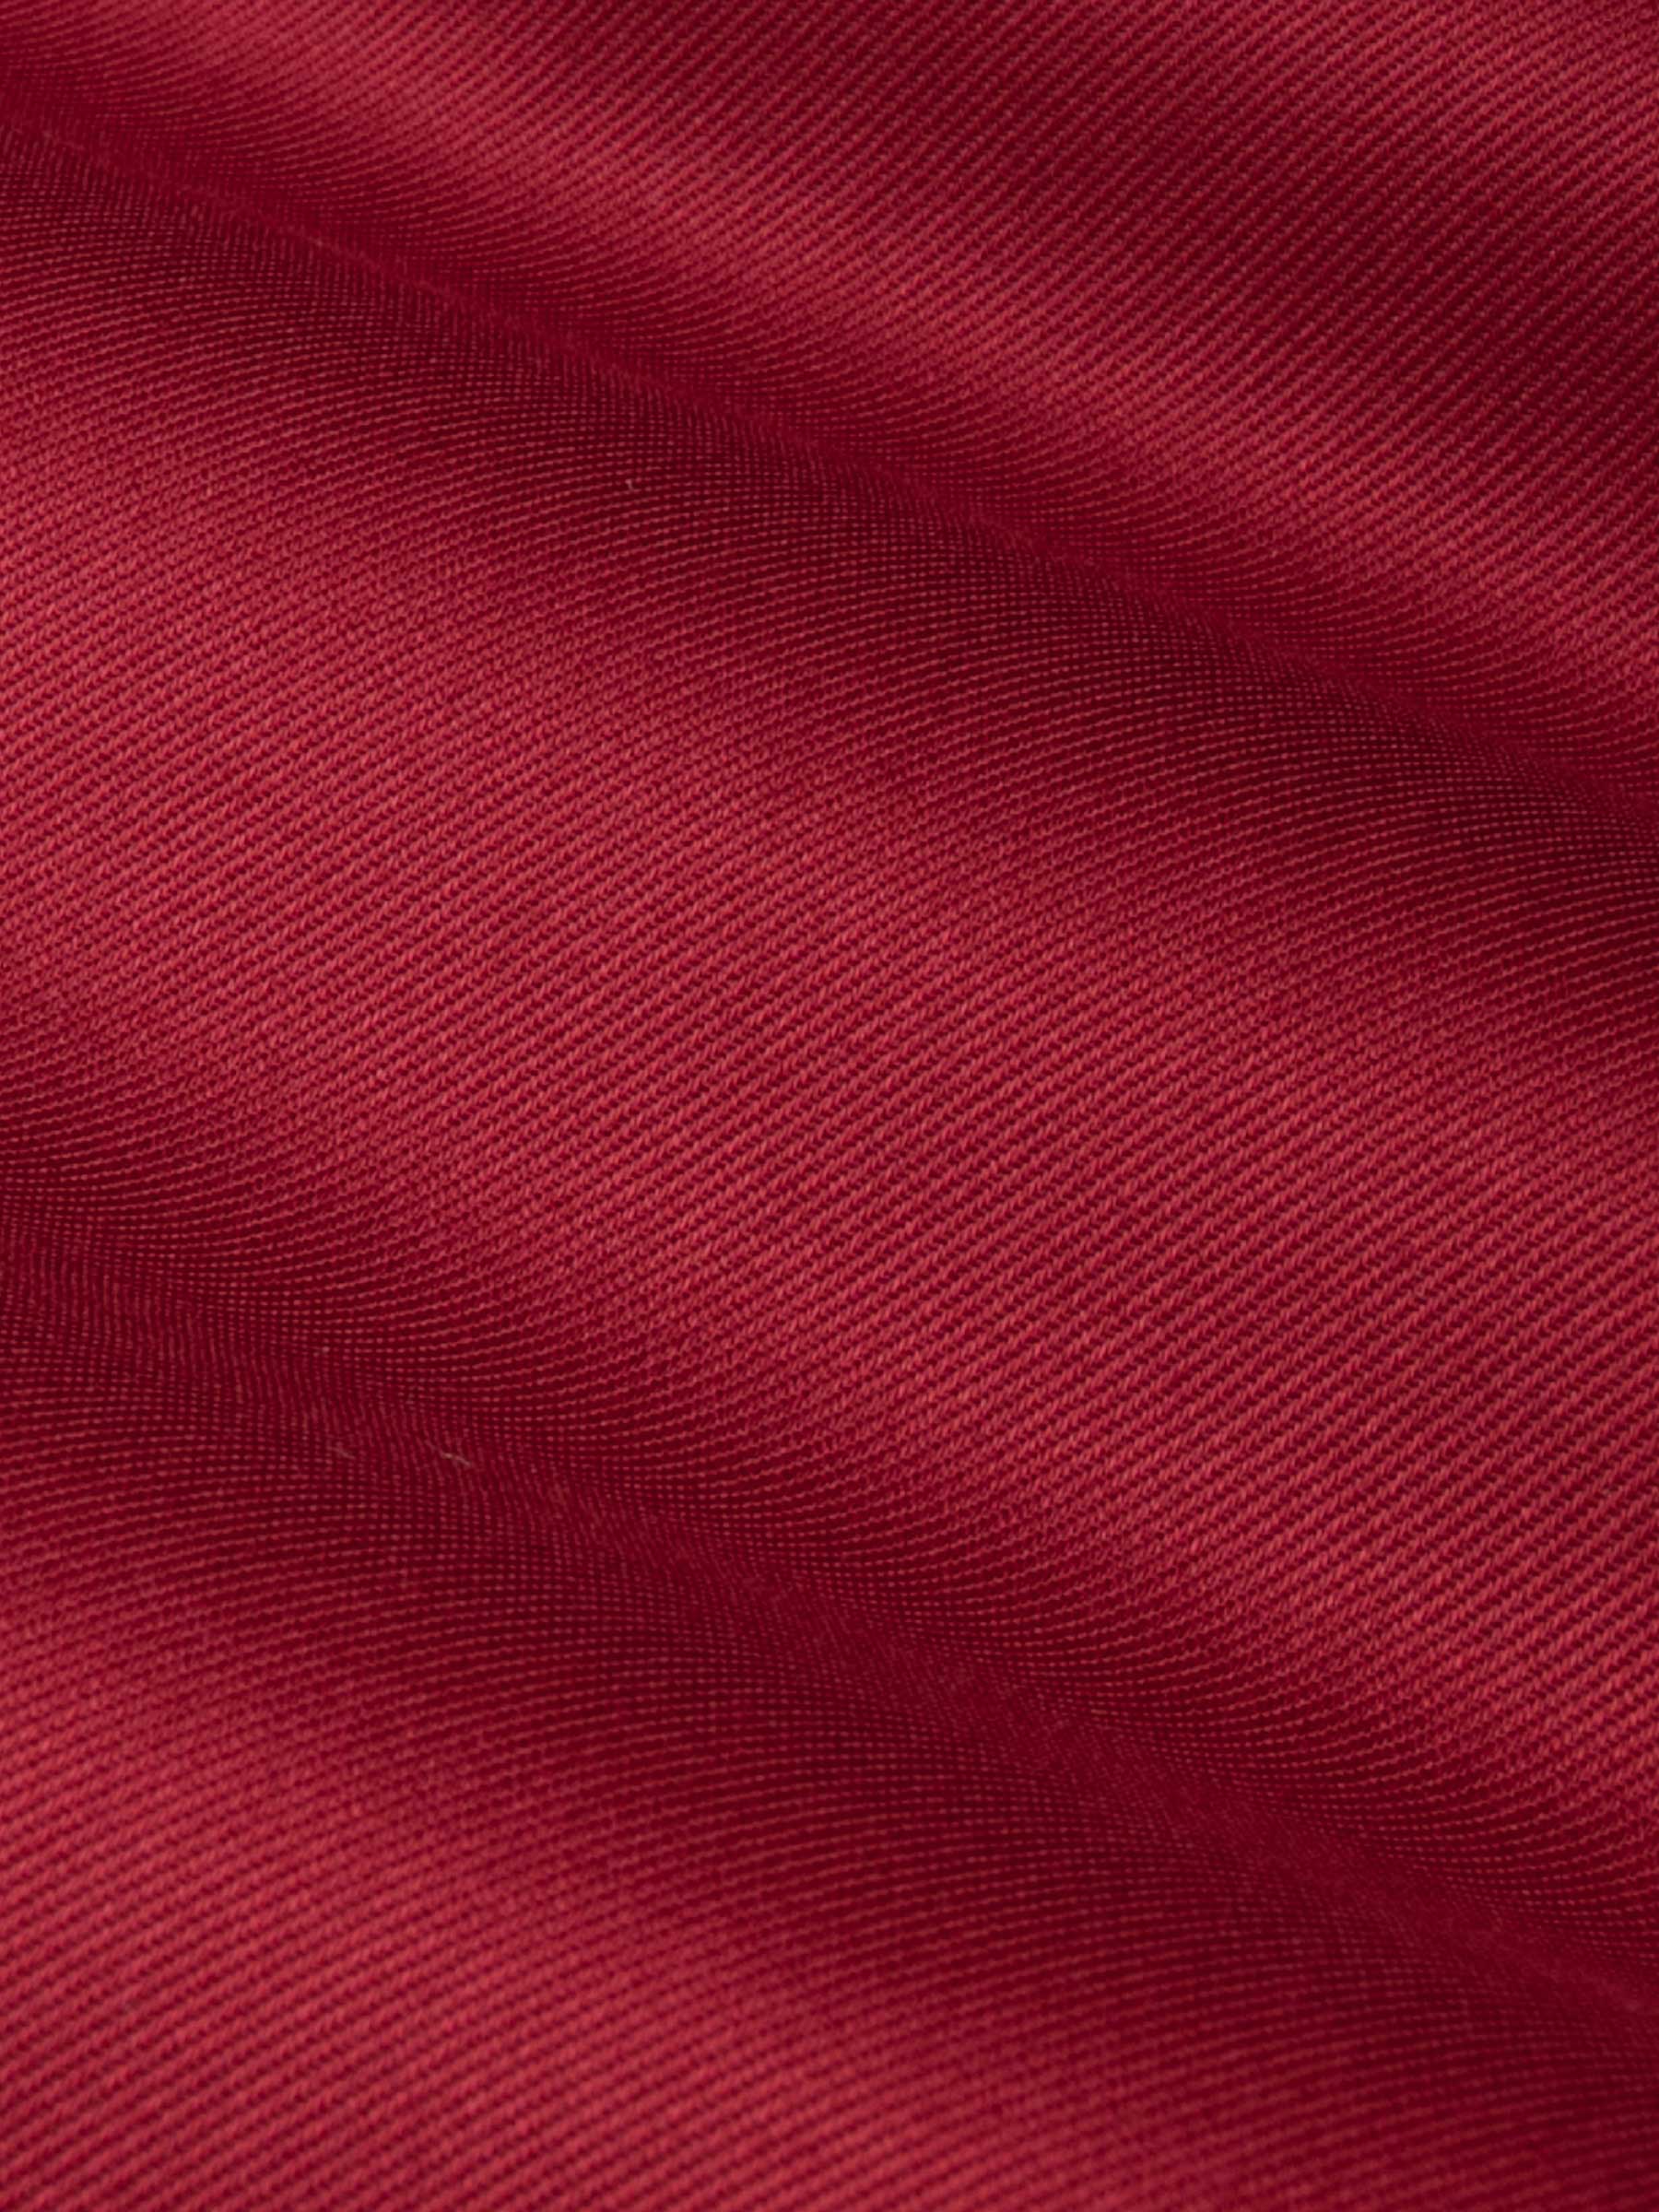 Lance Solid Red Overhemd Lange Mouw-S